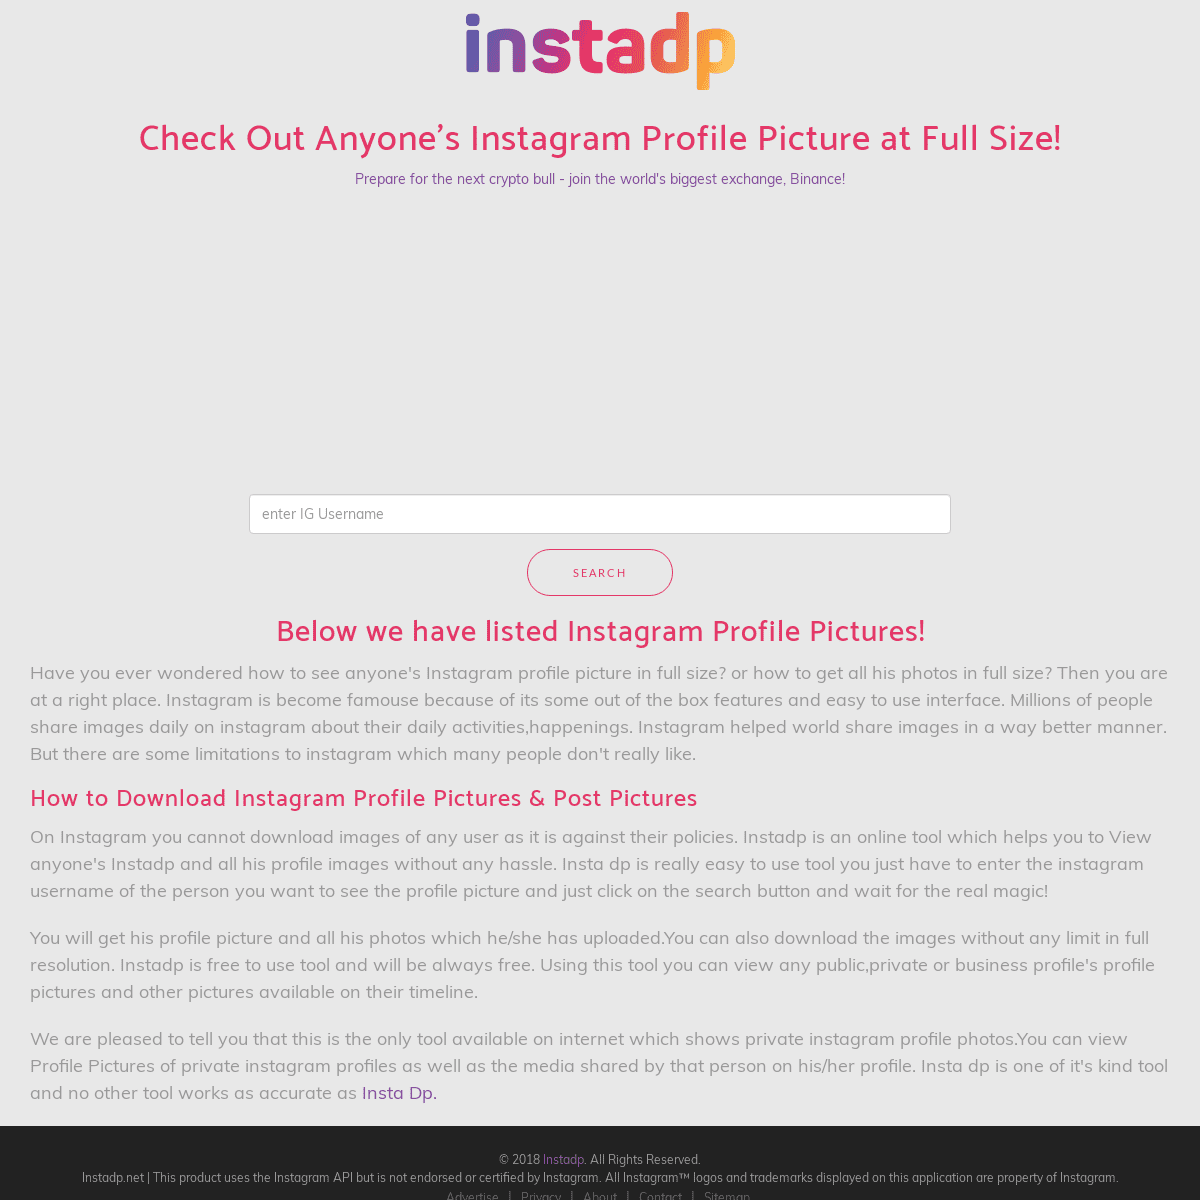 A complete backup of instadp.net